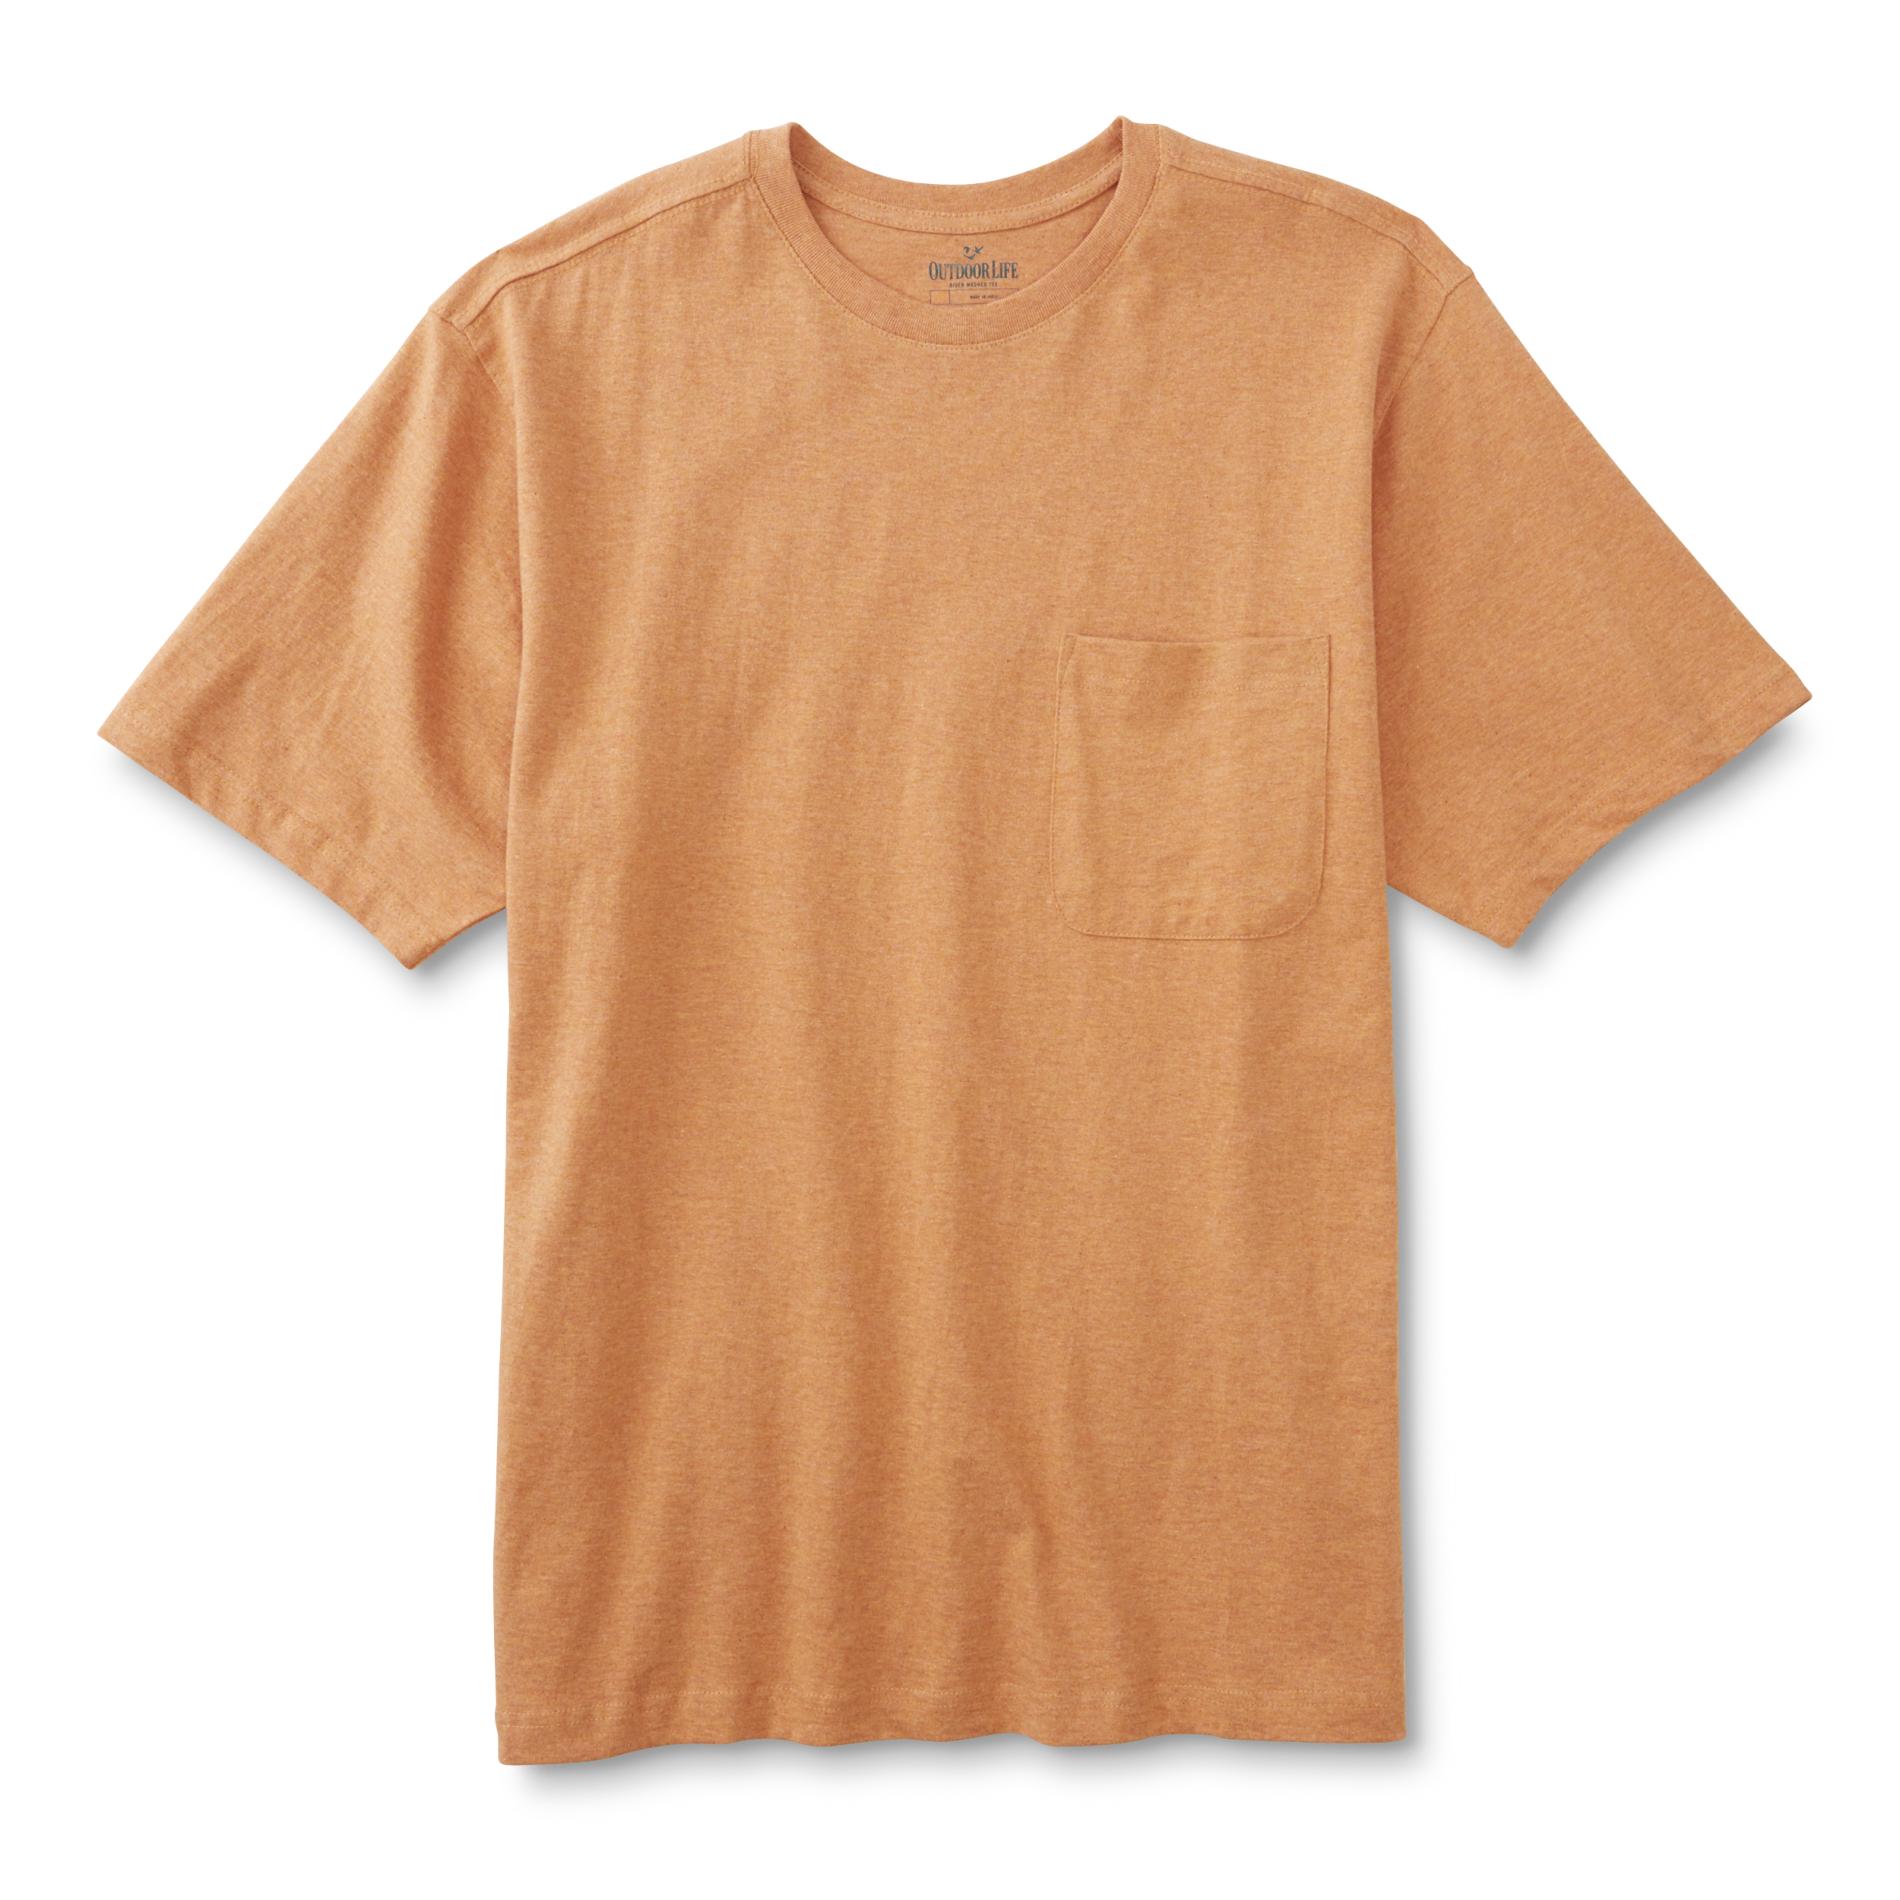 Outdoor Life Men's Big & Tall Pocket T-Shirt